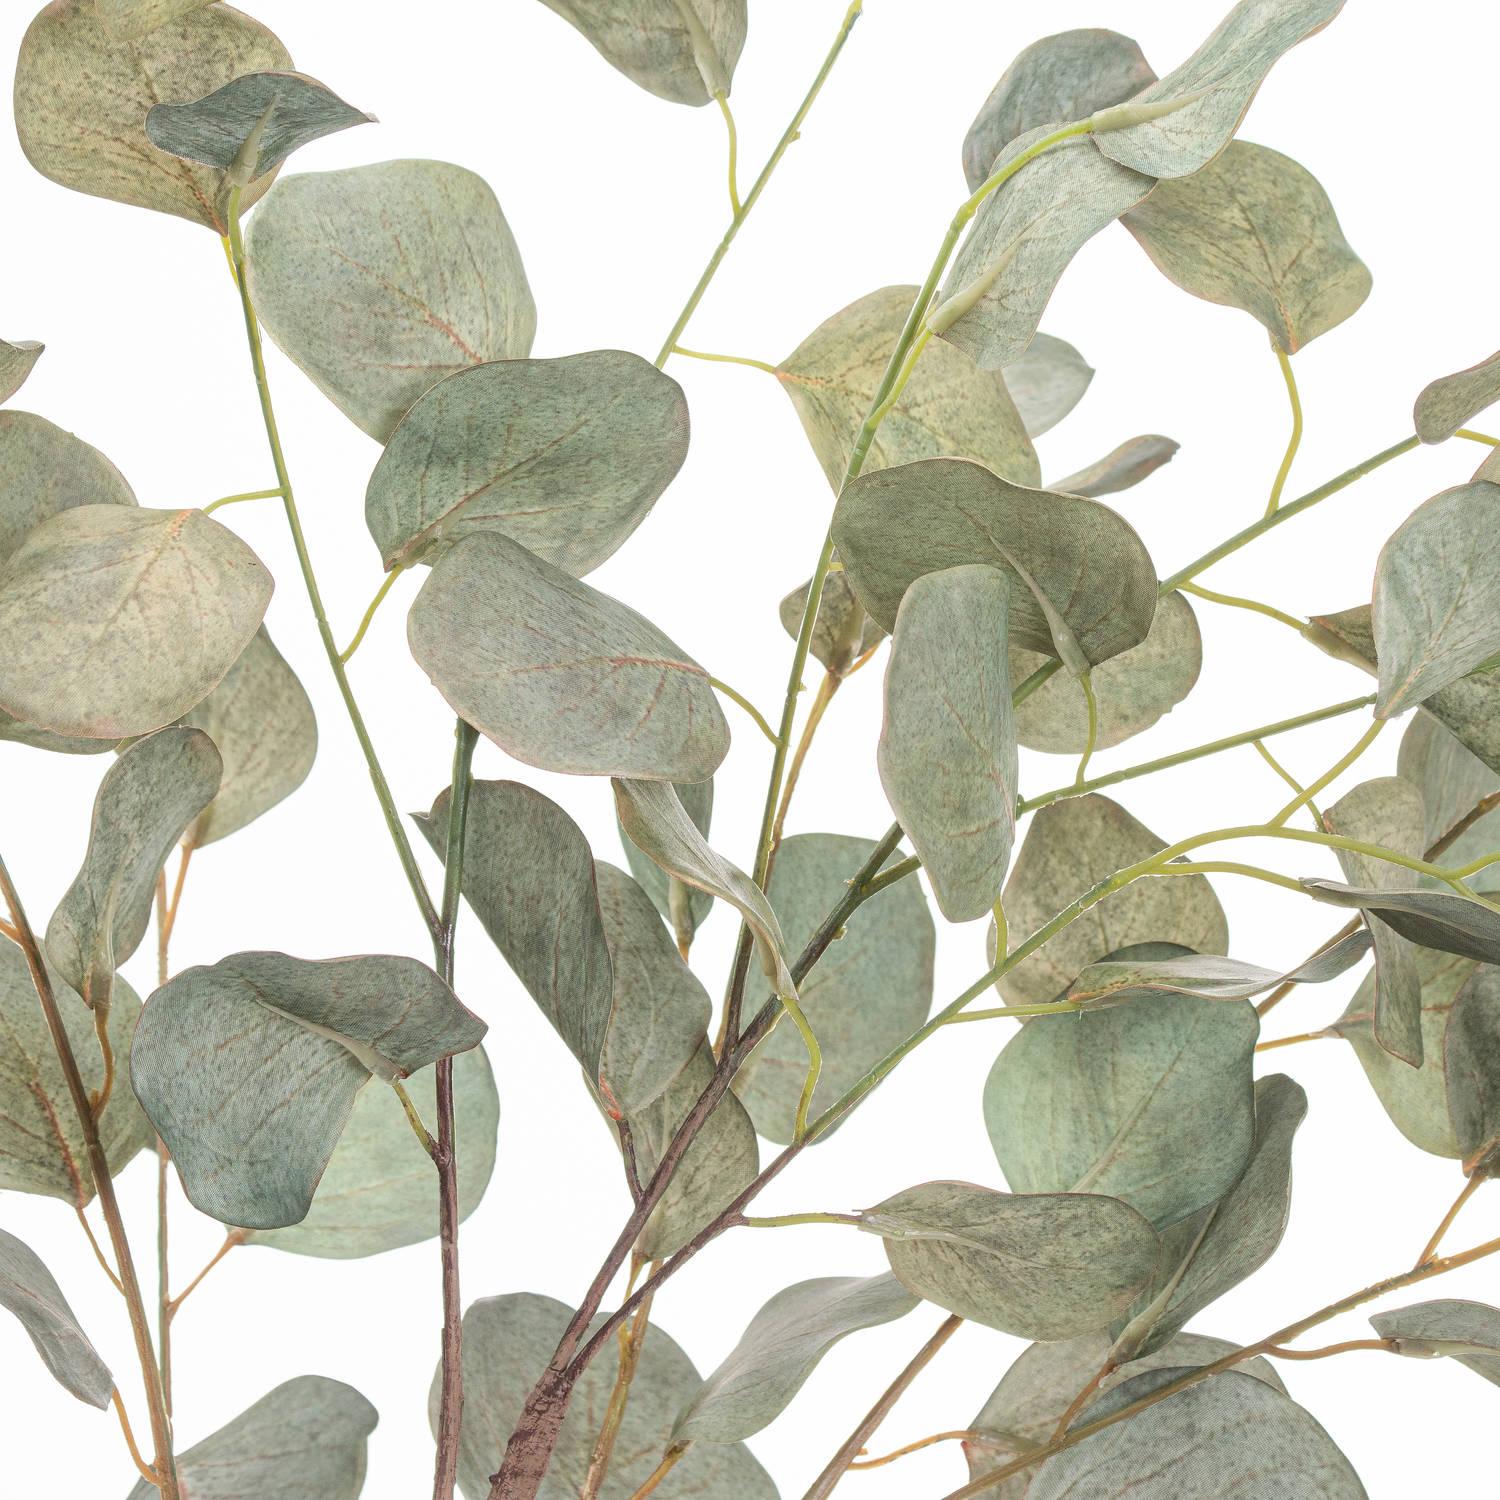 Eucalyptus Tree In Metallic Pot - Vookoo Lifestyle